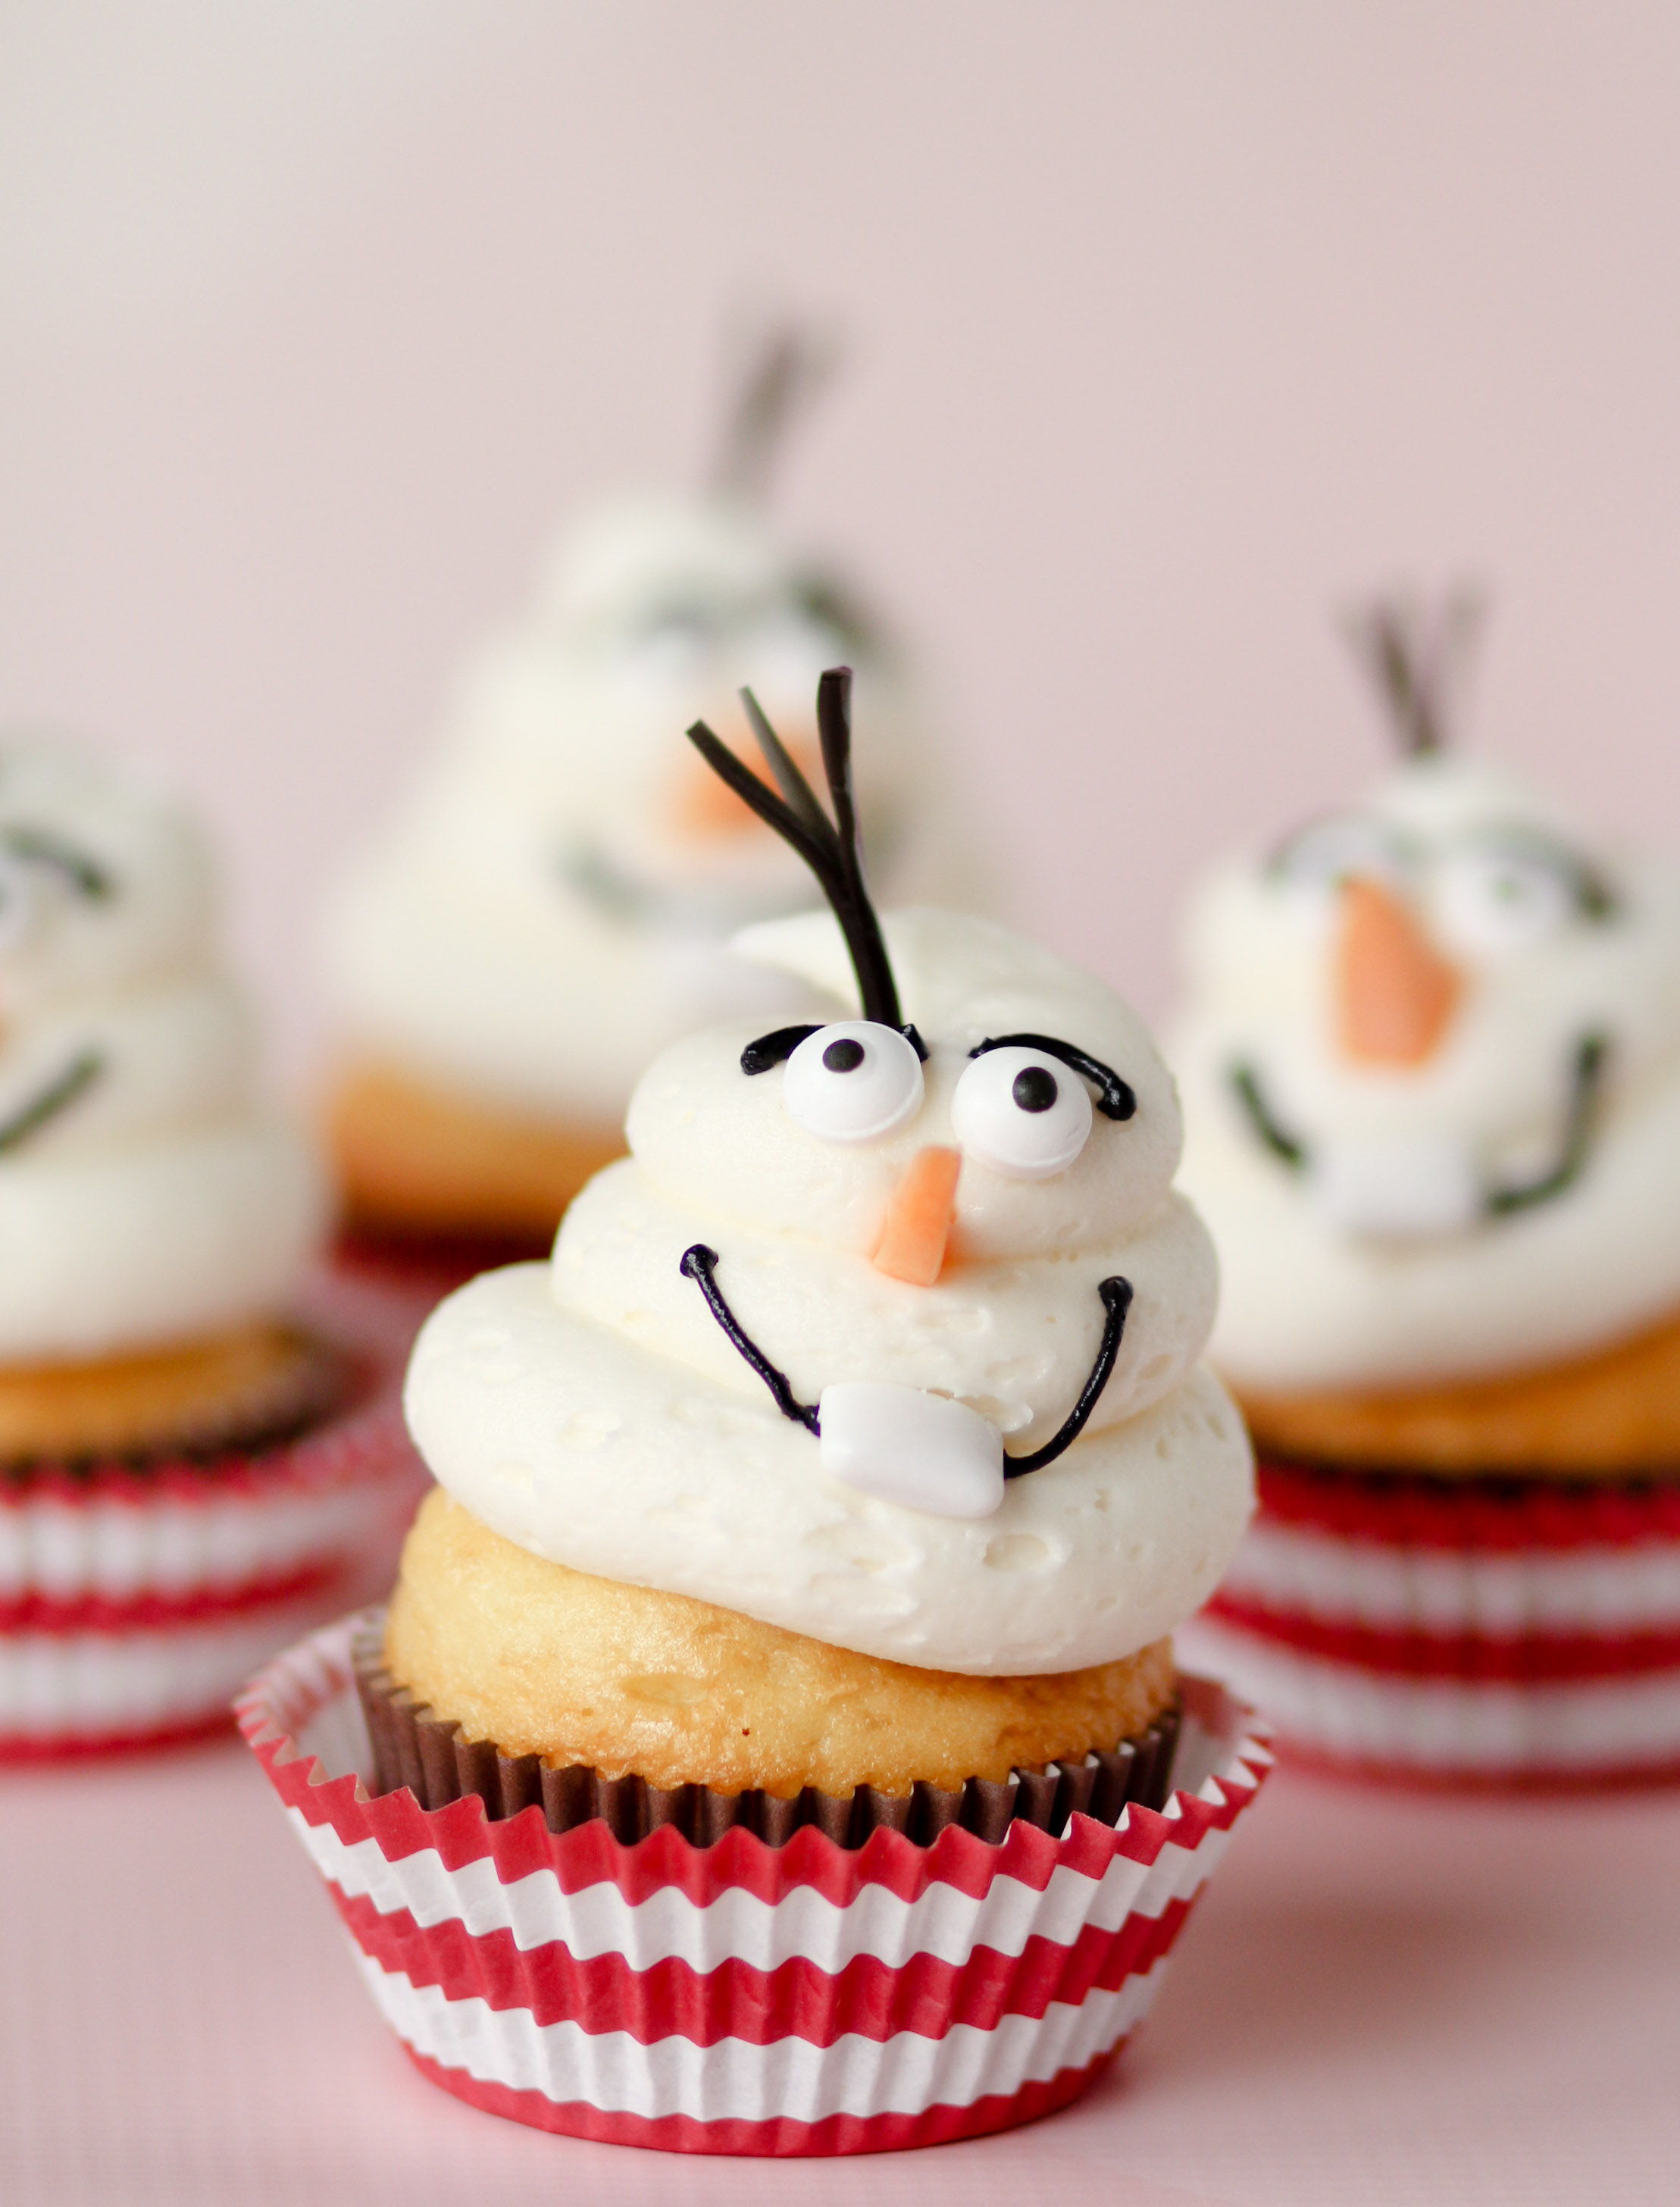 Disney Frozen Olaf Cupcakes